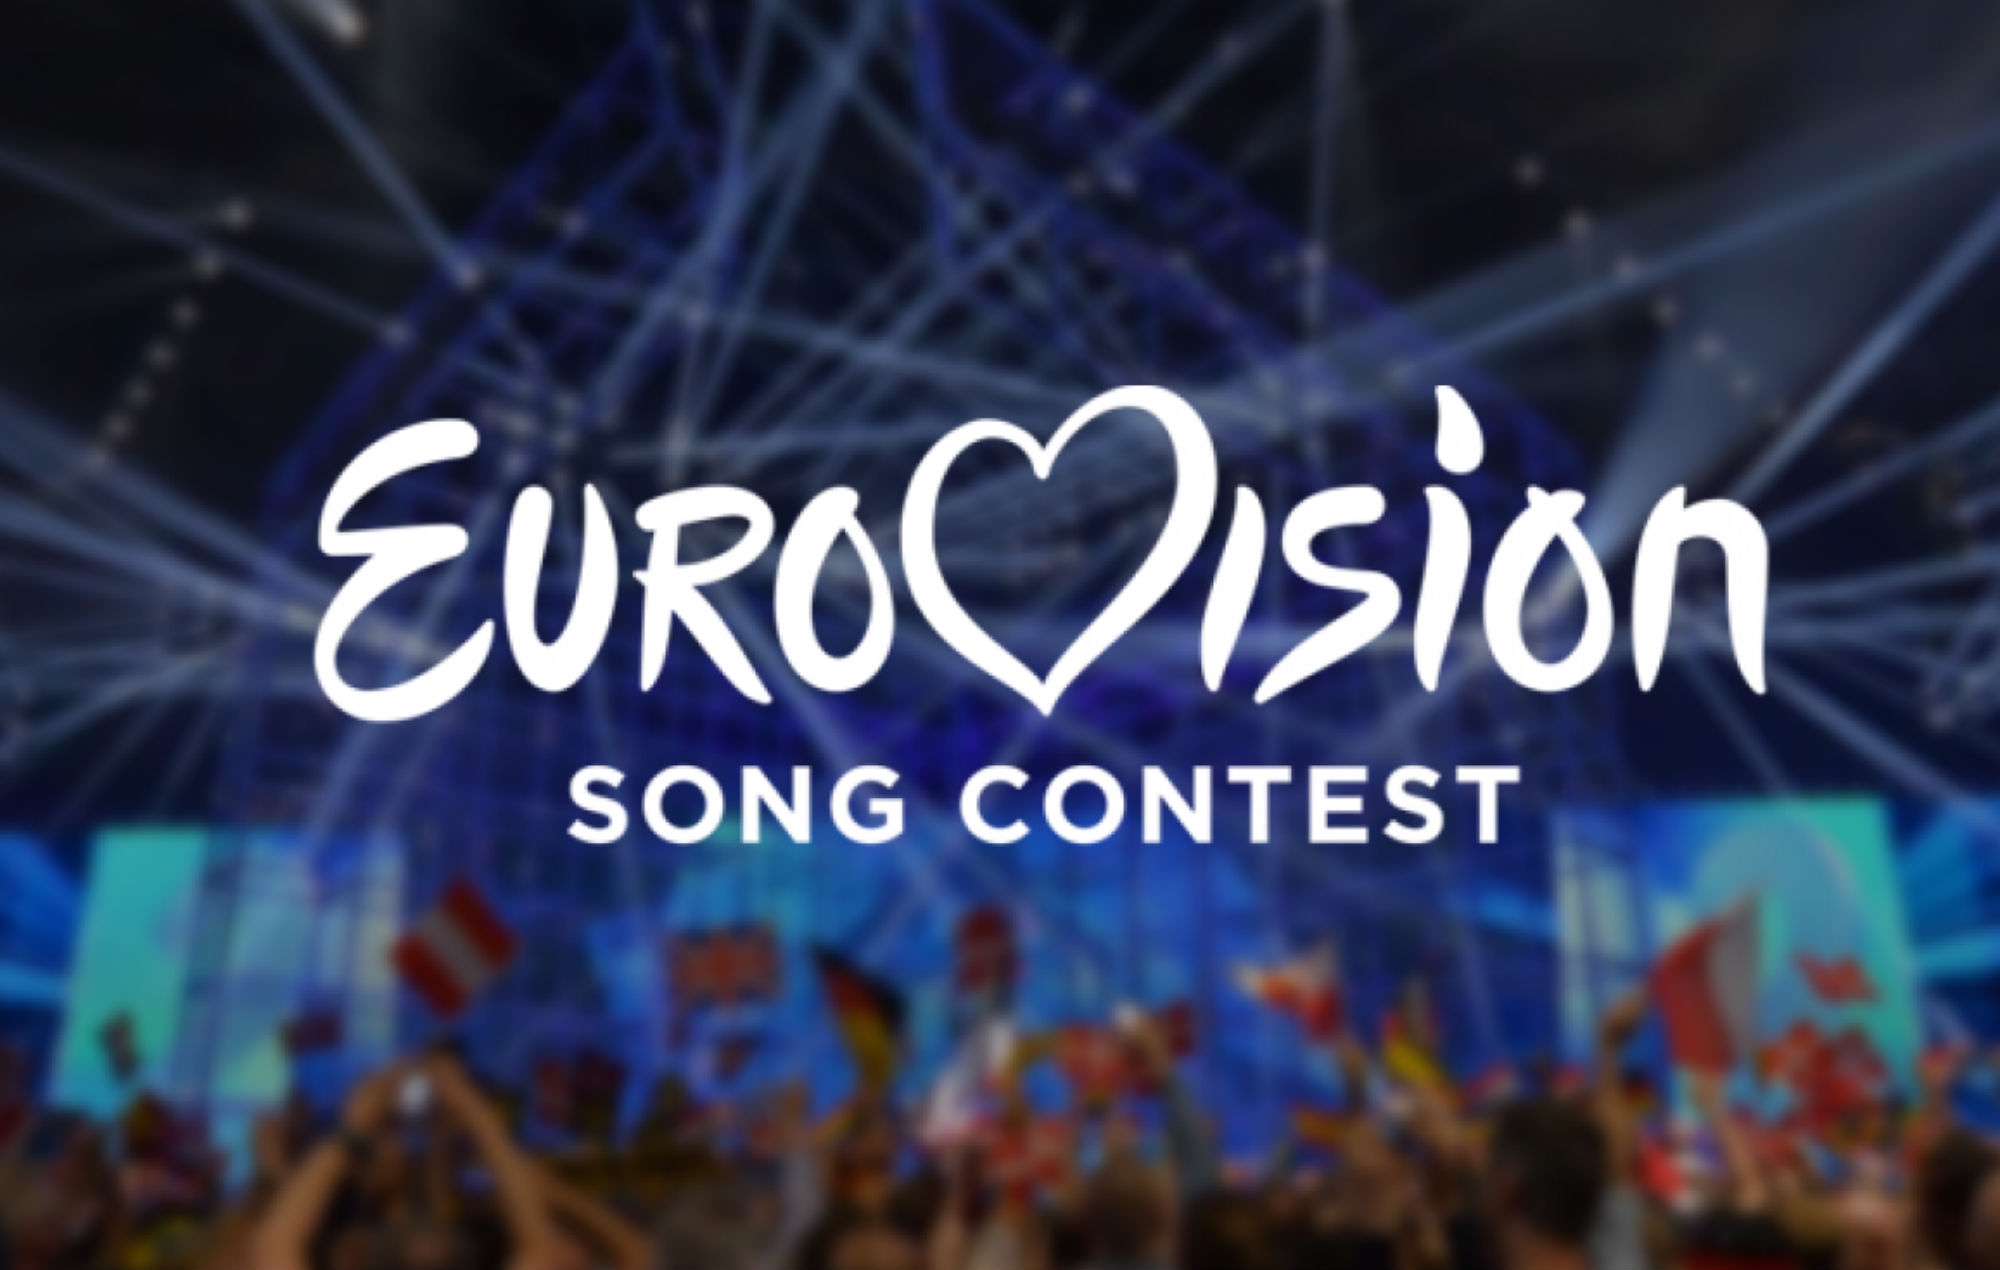 Eurovision: Ποιο διάσημο μουσικό συγκρότημα των 90s και 00s θα εκπροσωπήσει το Βέλγιο;